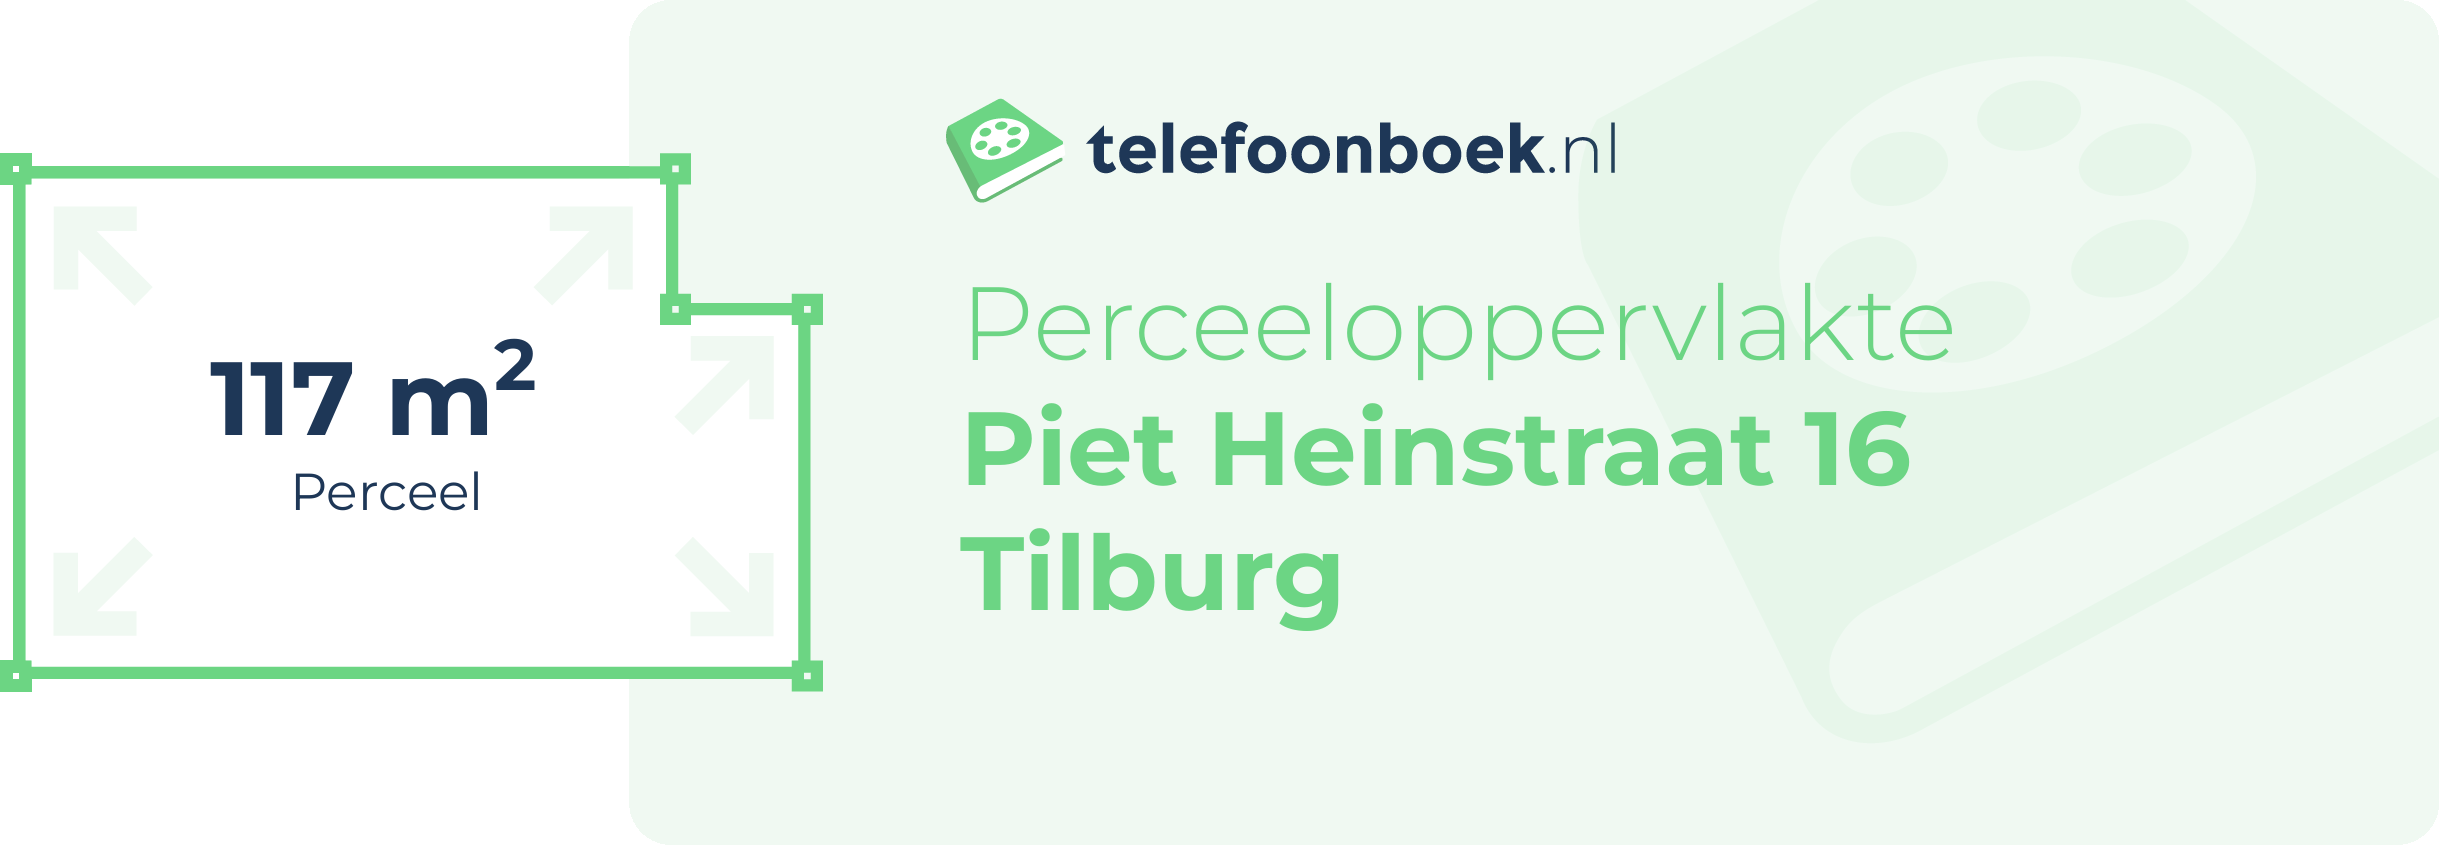 Perceeloppervlakte Piet Heinstraat 16 Tilburg